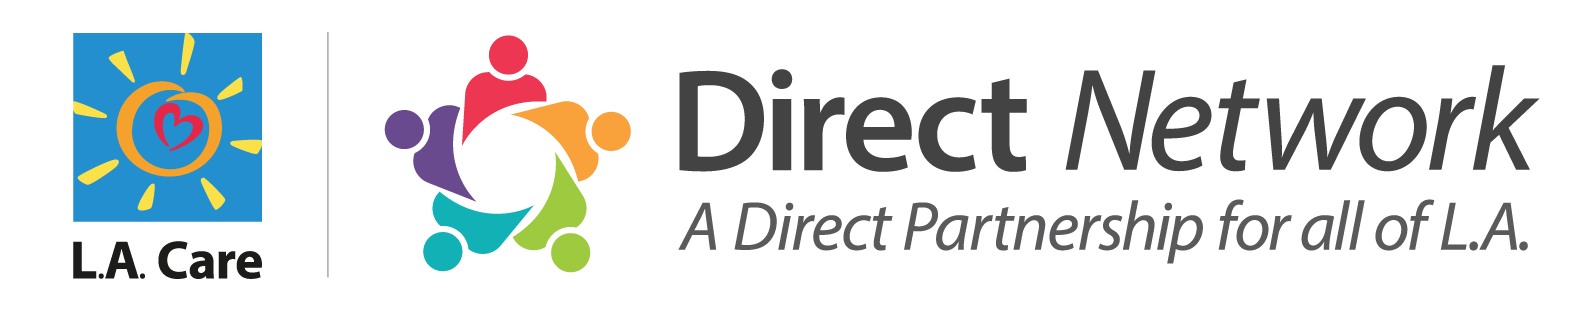 L.A. Care Direct Network